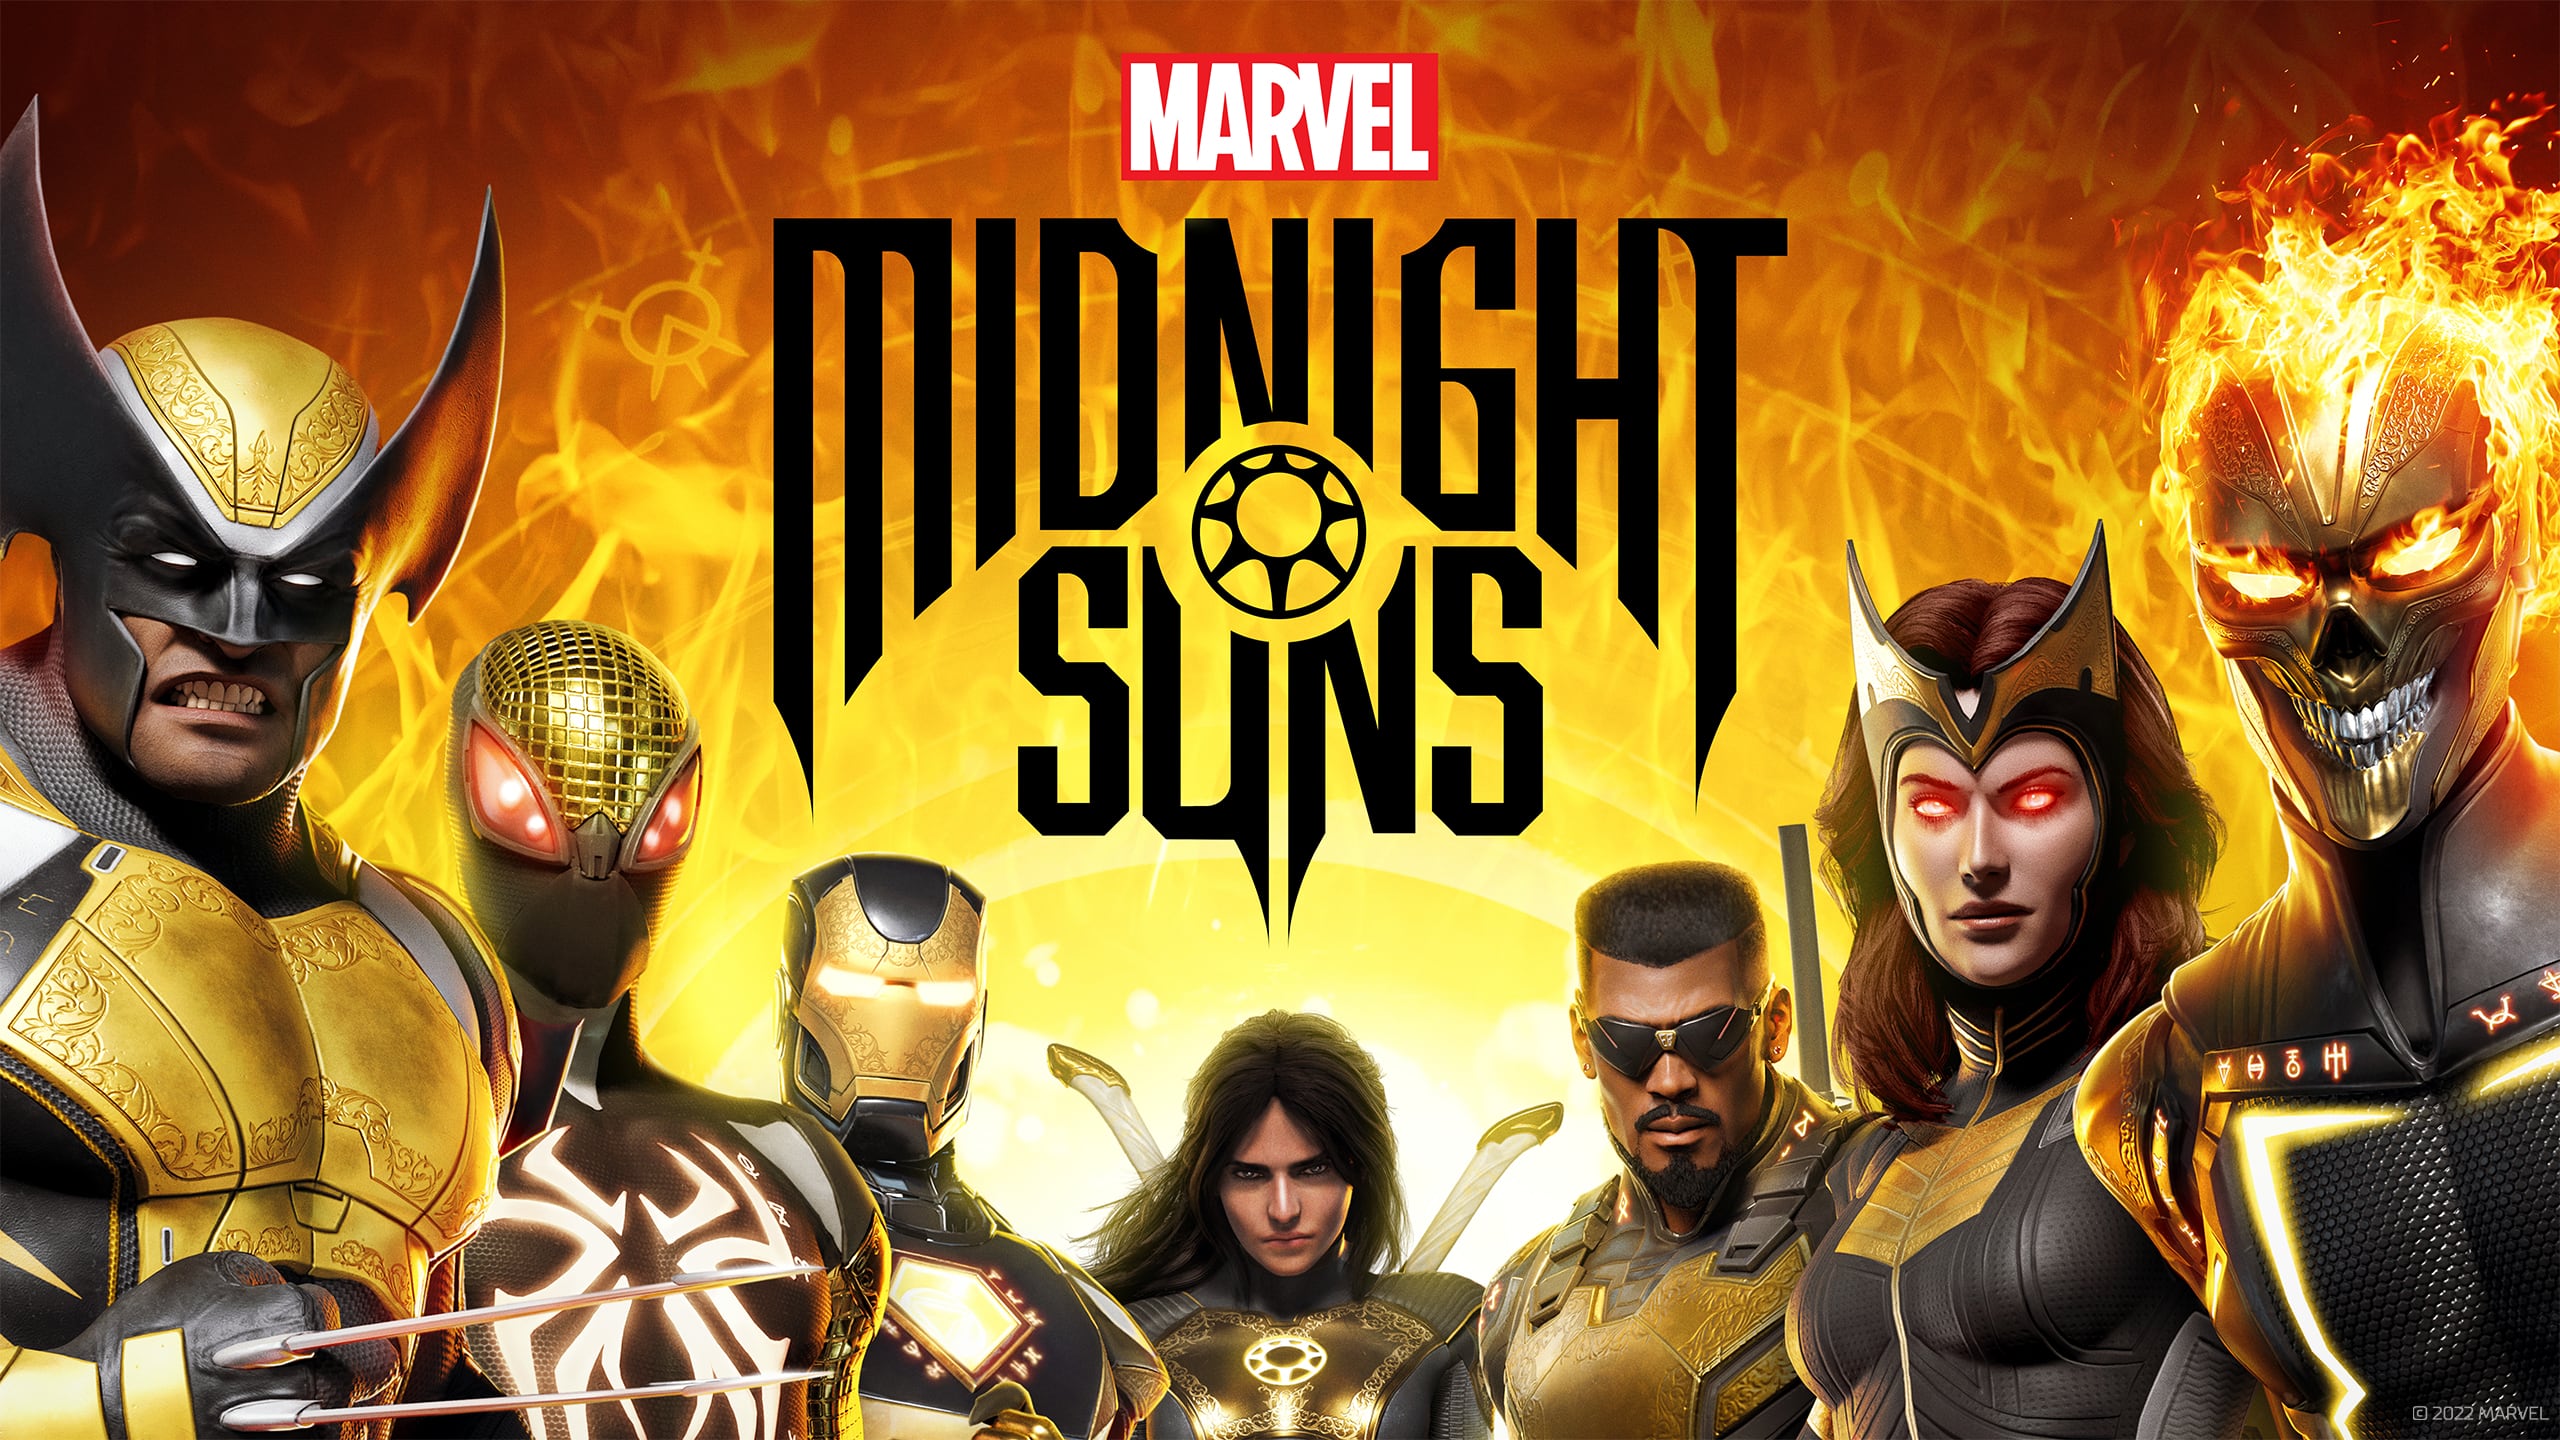 Marvel Midnight Suns Guides - Beginner's Guide